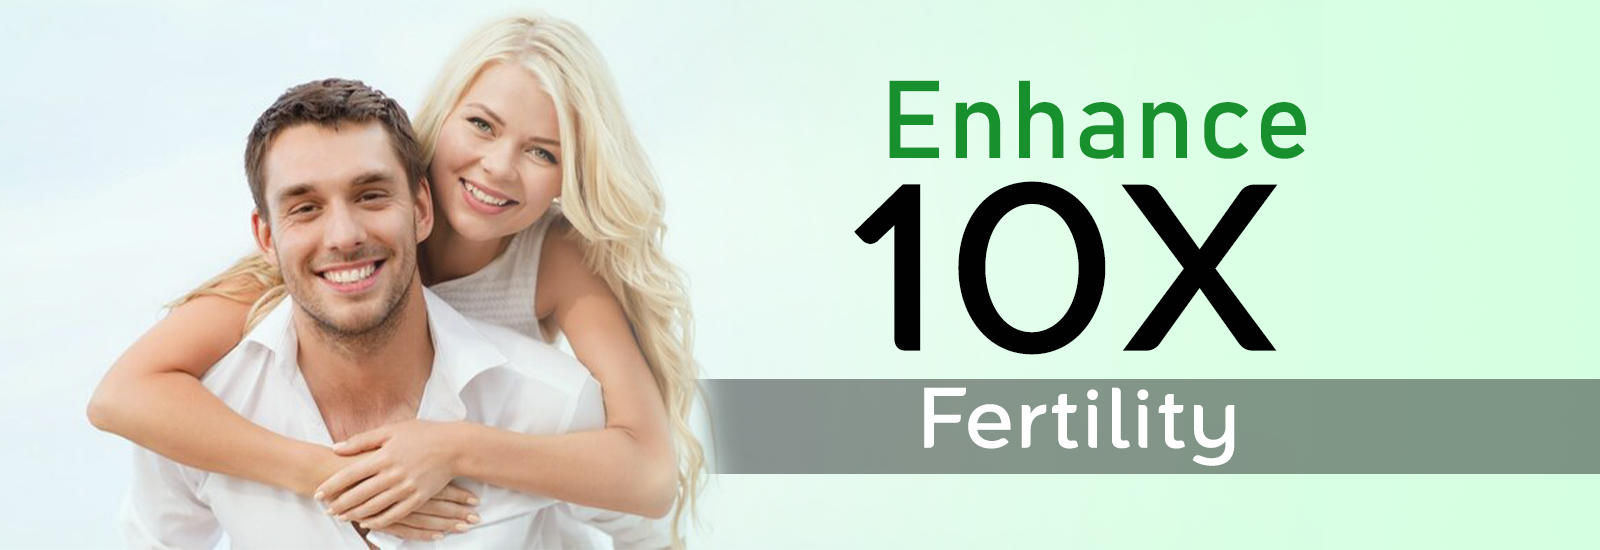 Fertility Booster Kit For Women